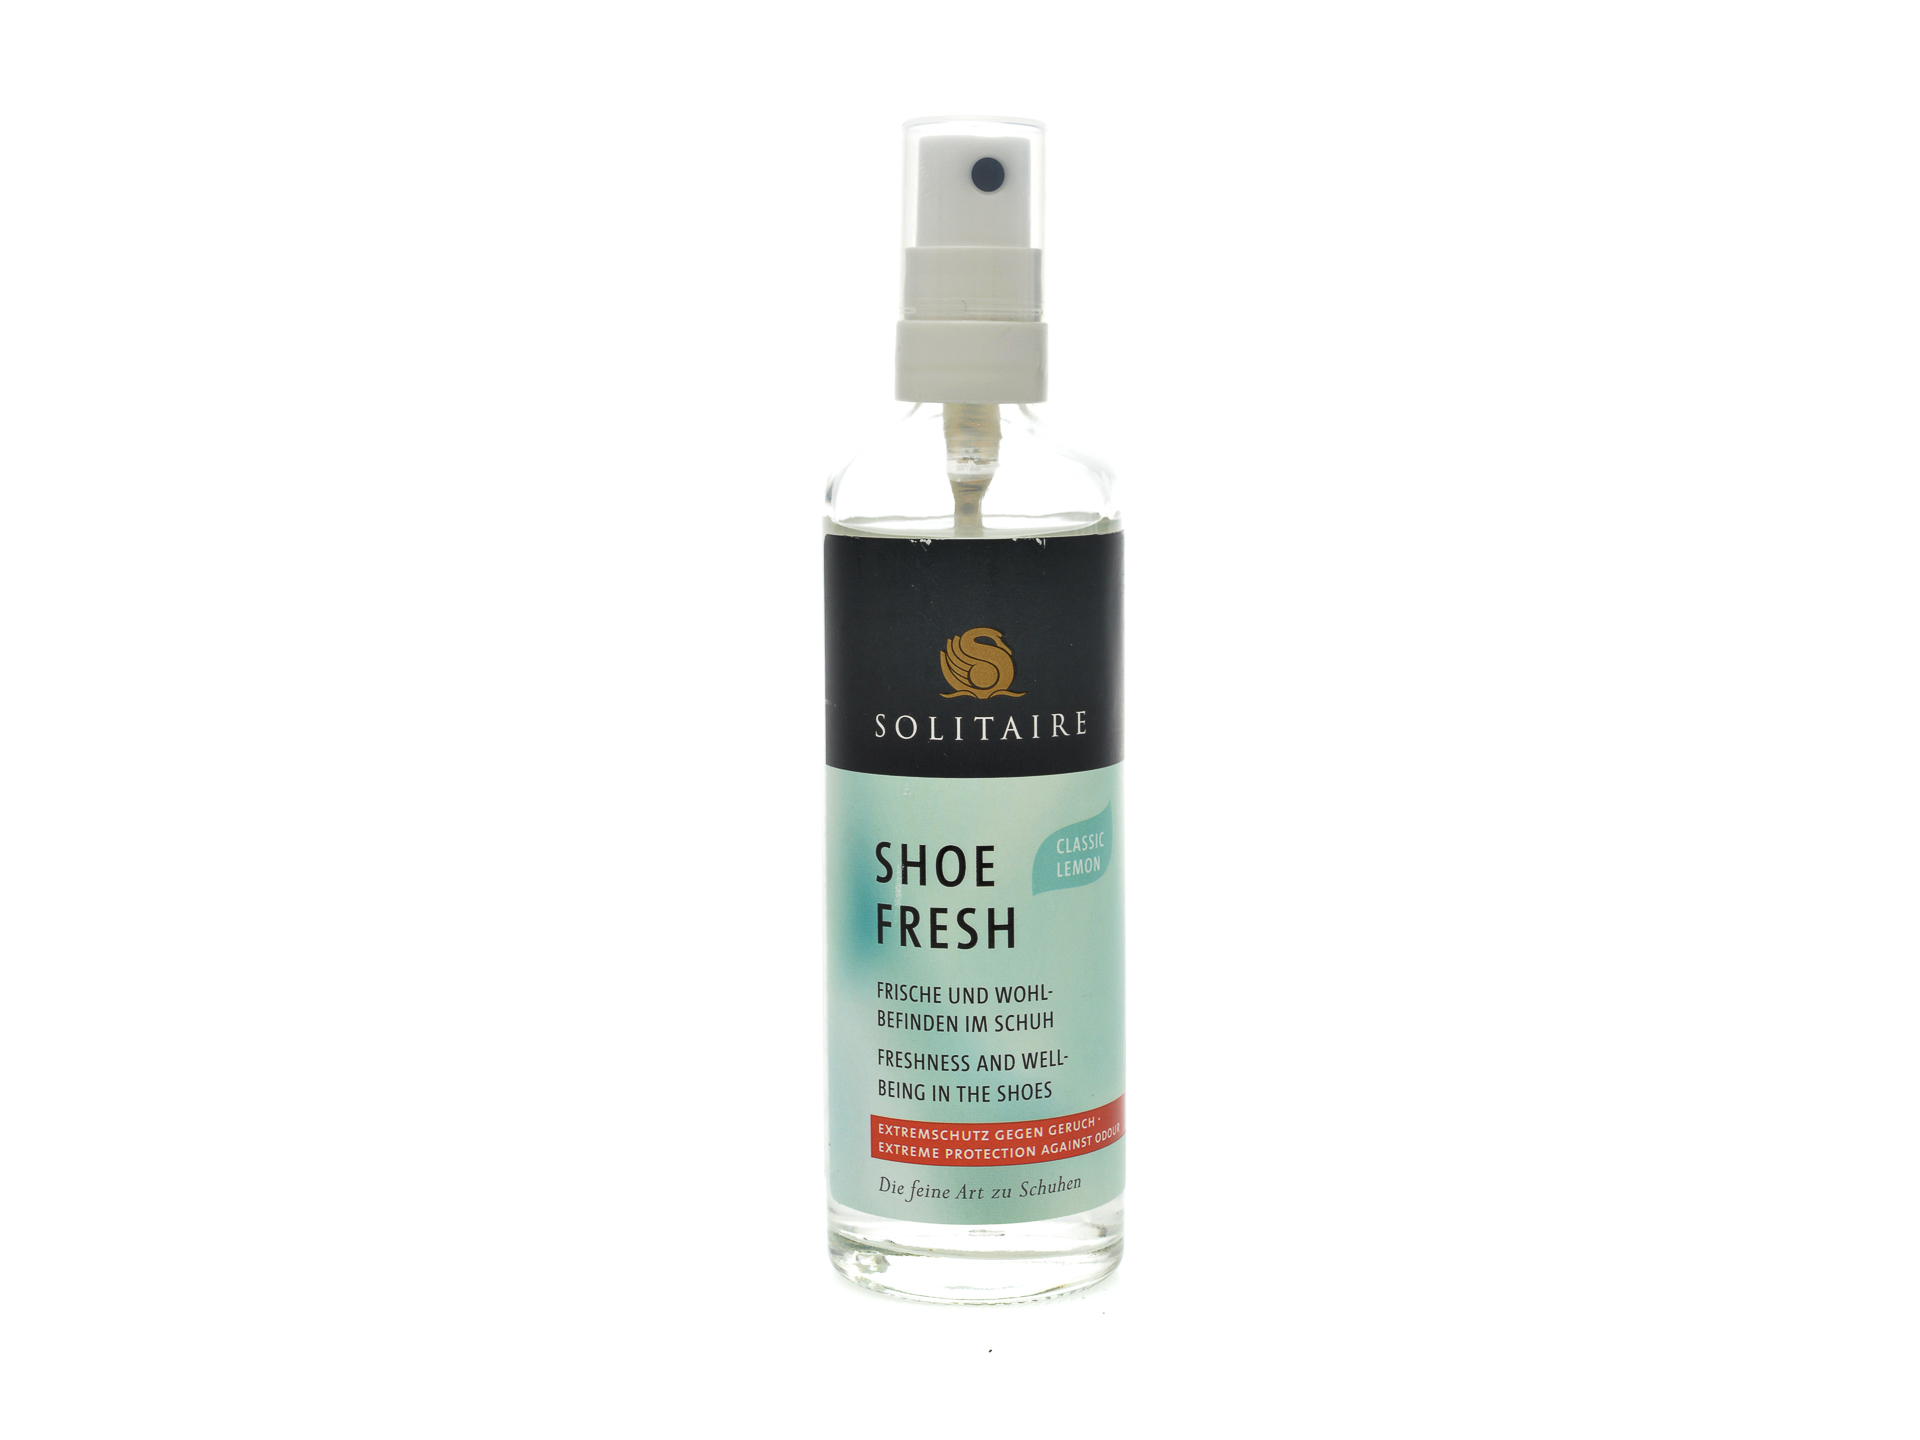 Spray pentru mentinerea mirosului placut in incaltaminte, Solitaire imagine otter.ro